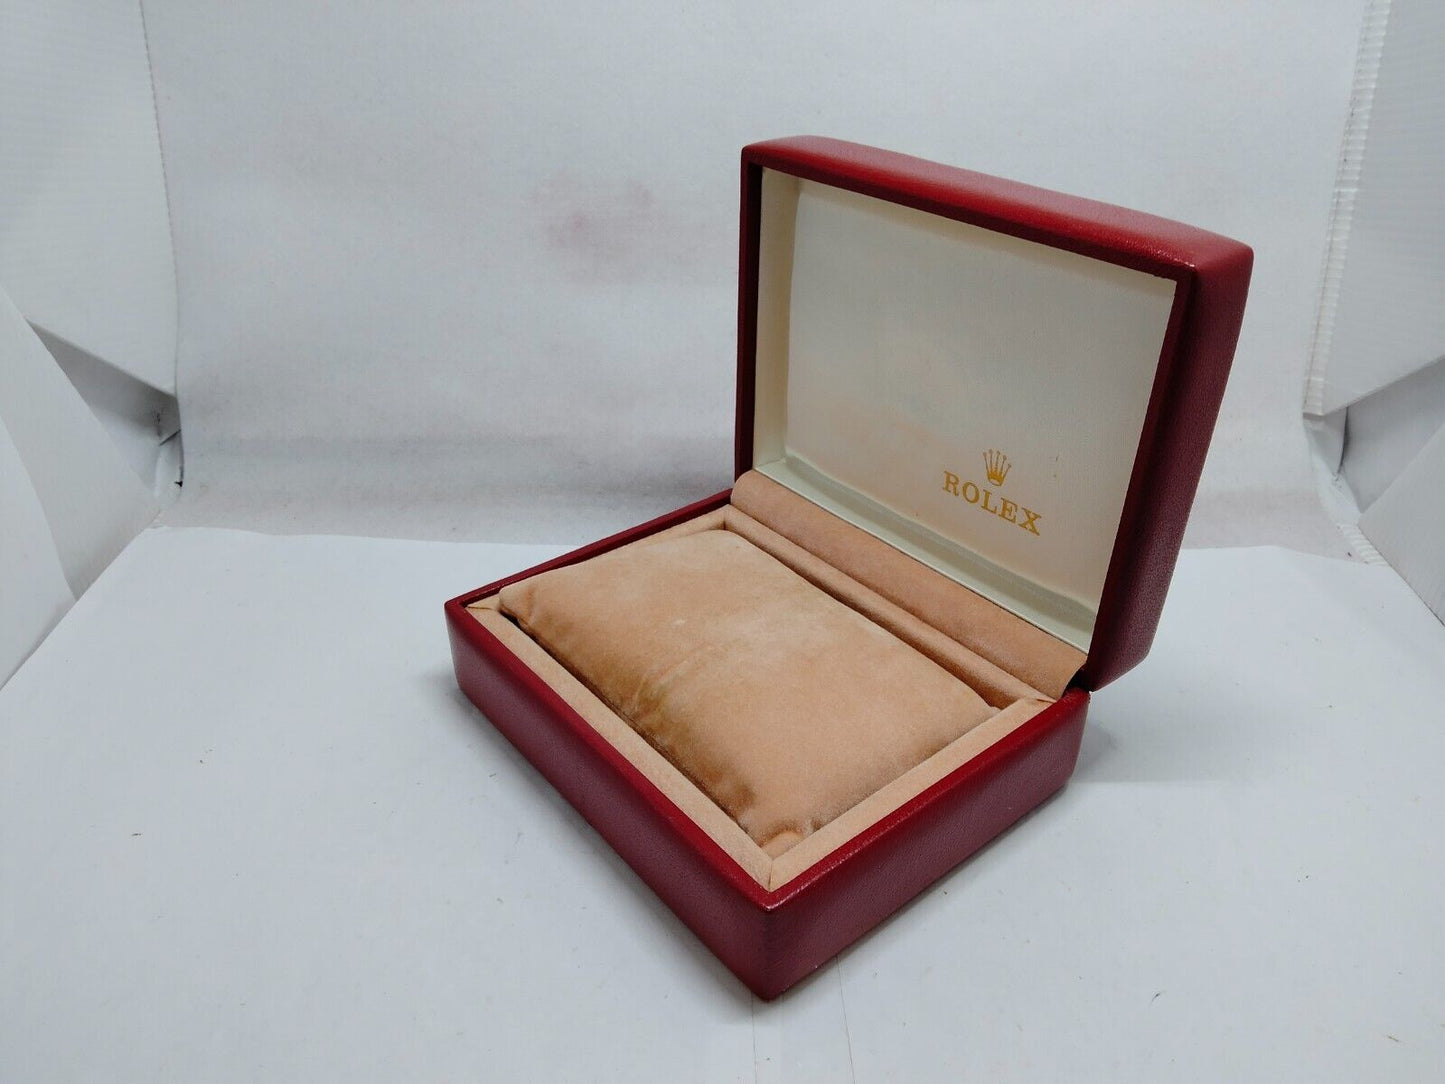 VINTAGE GENUINE ROLEX Red watch box case 11.00.01 wood leather 230606012y2S